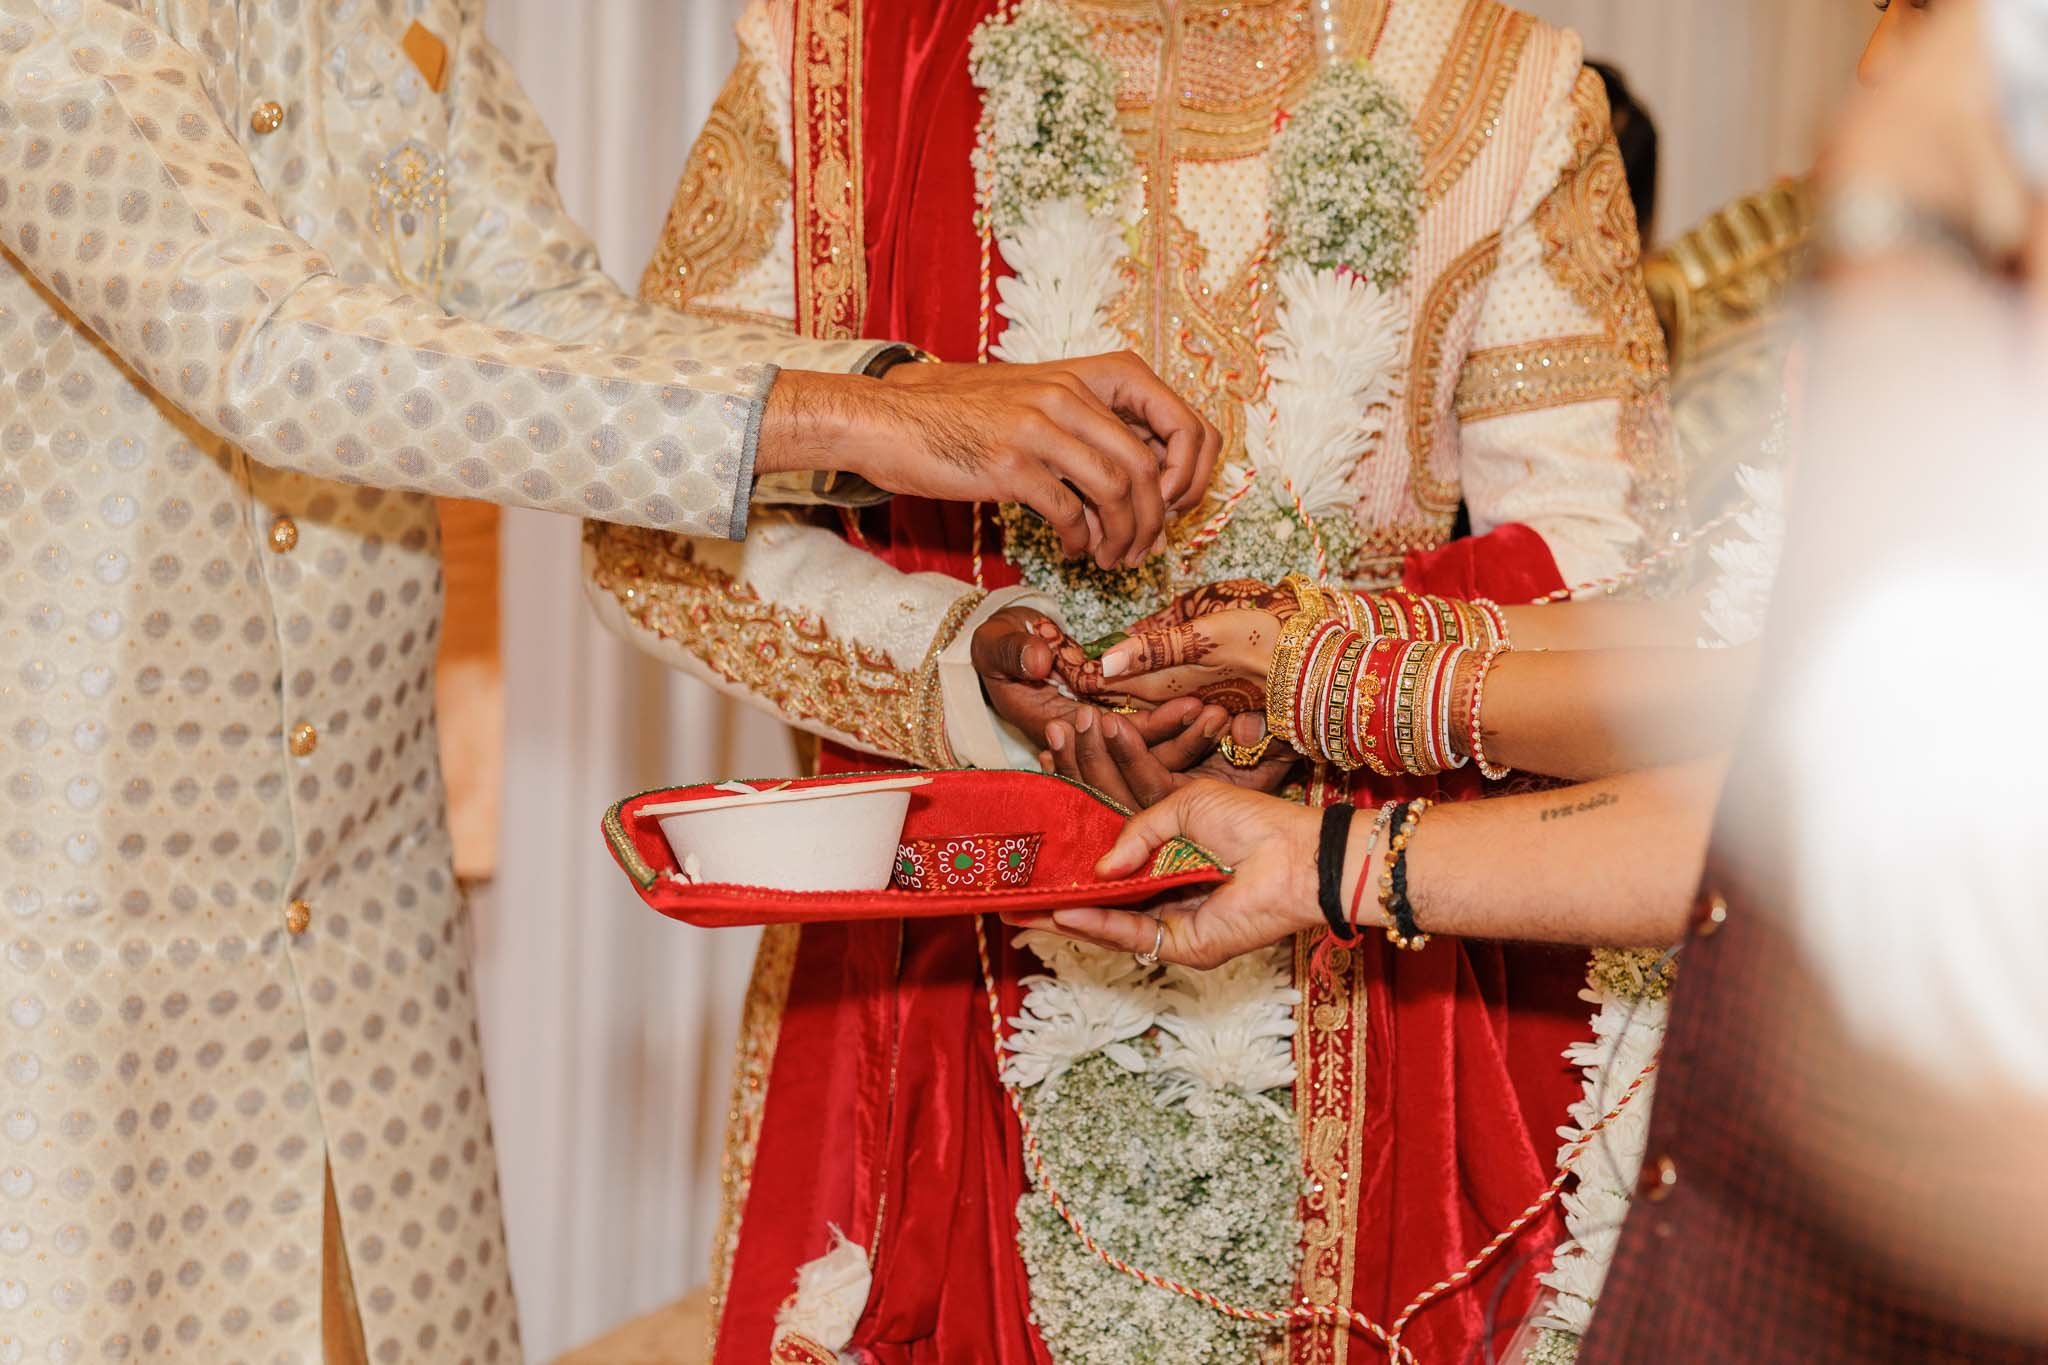 gift exchange during Indian wedding